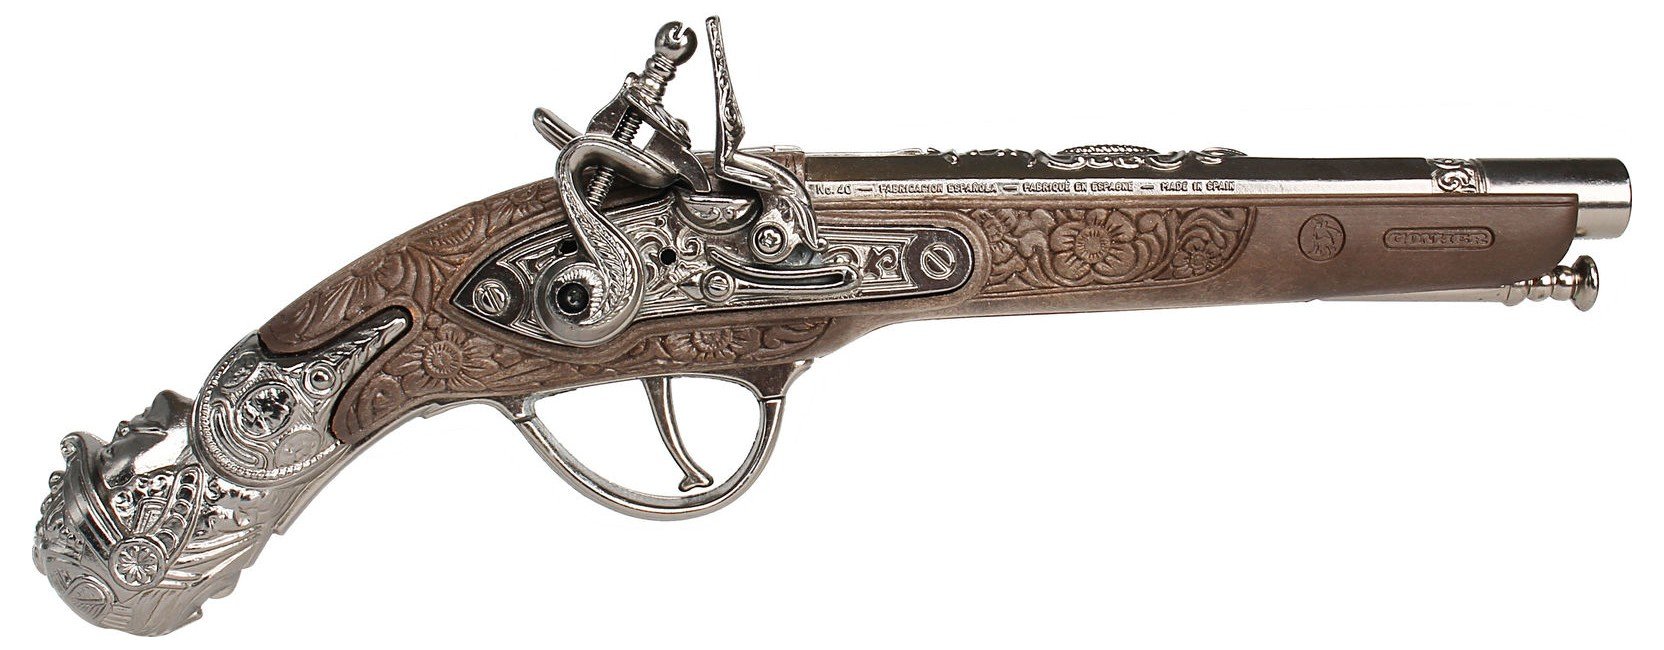 Gonher - Pirate Gun (42985)